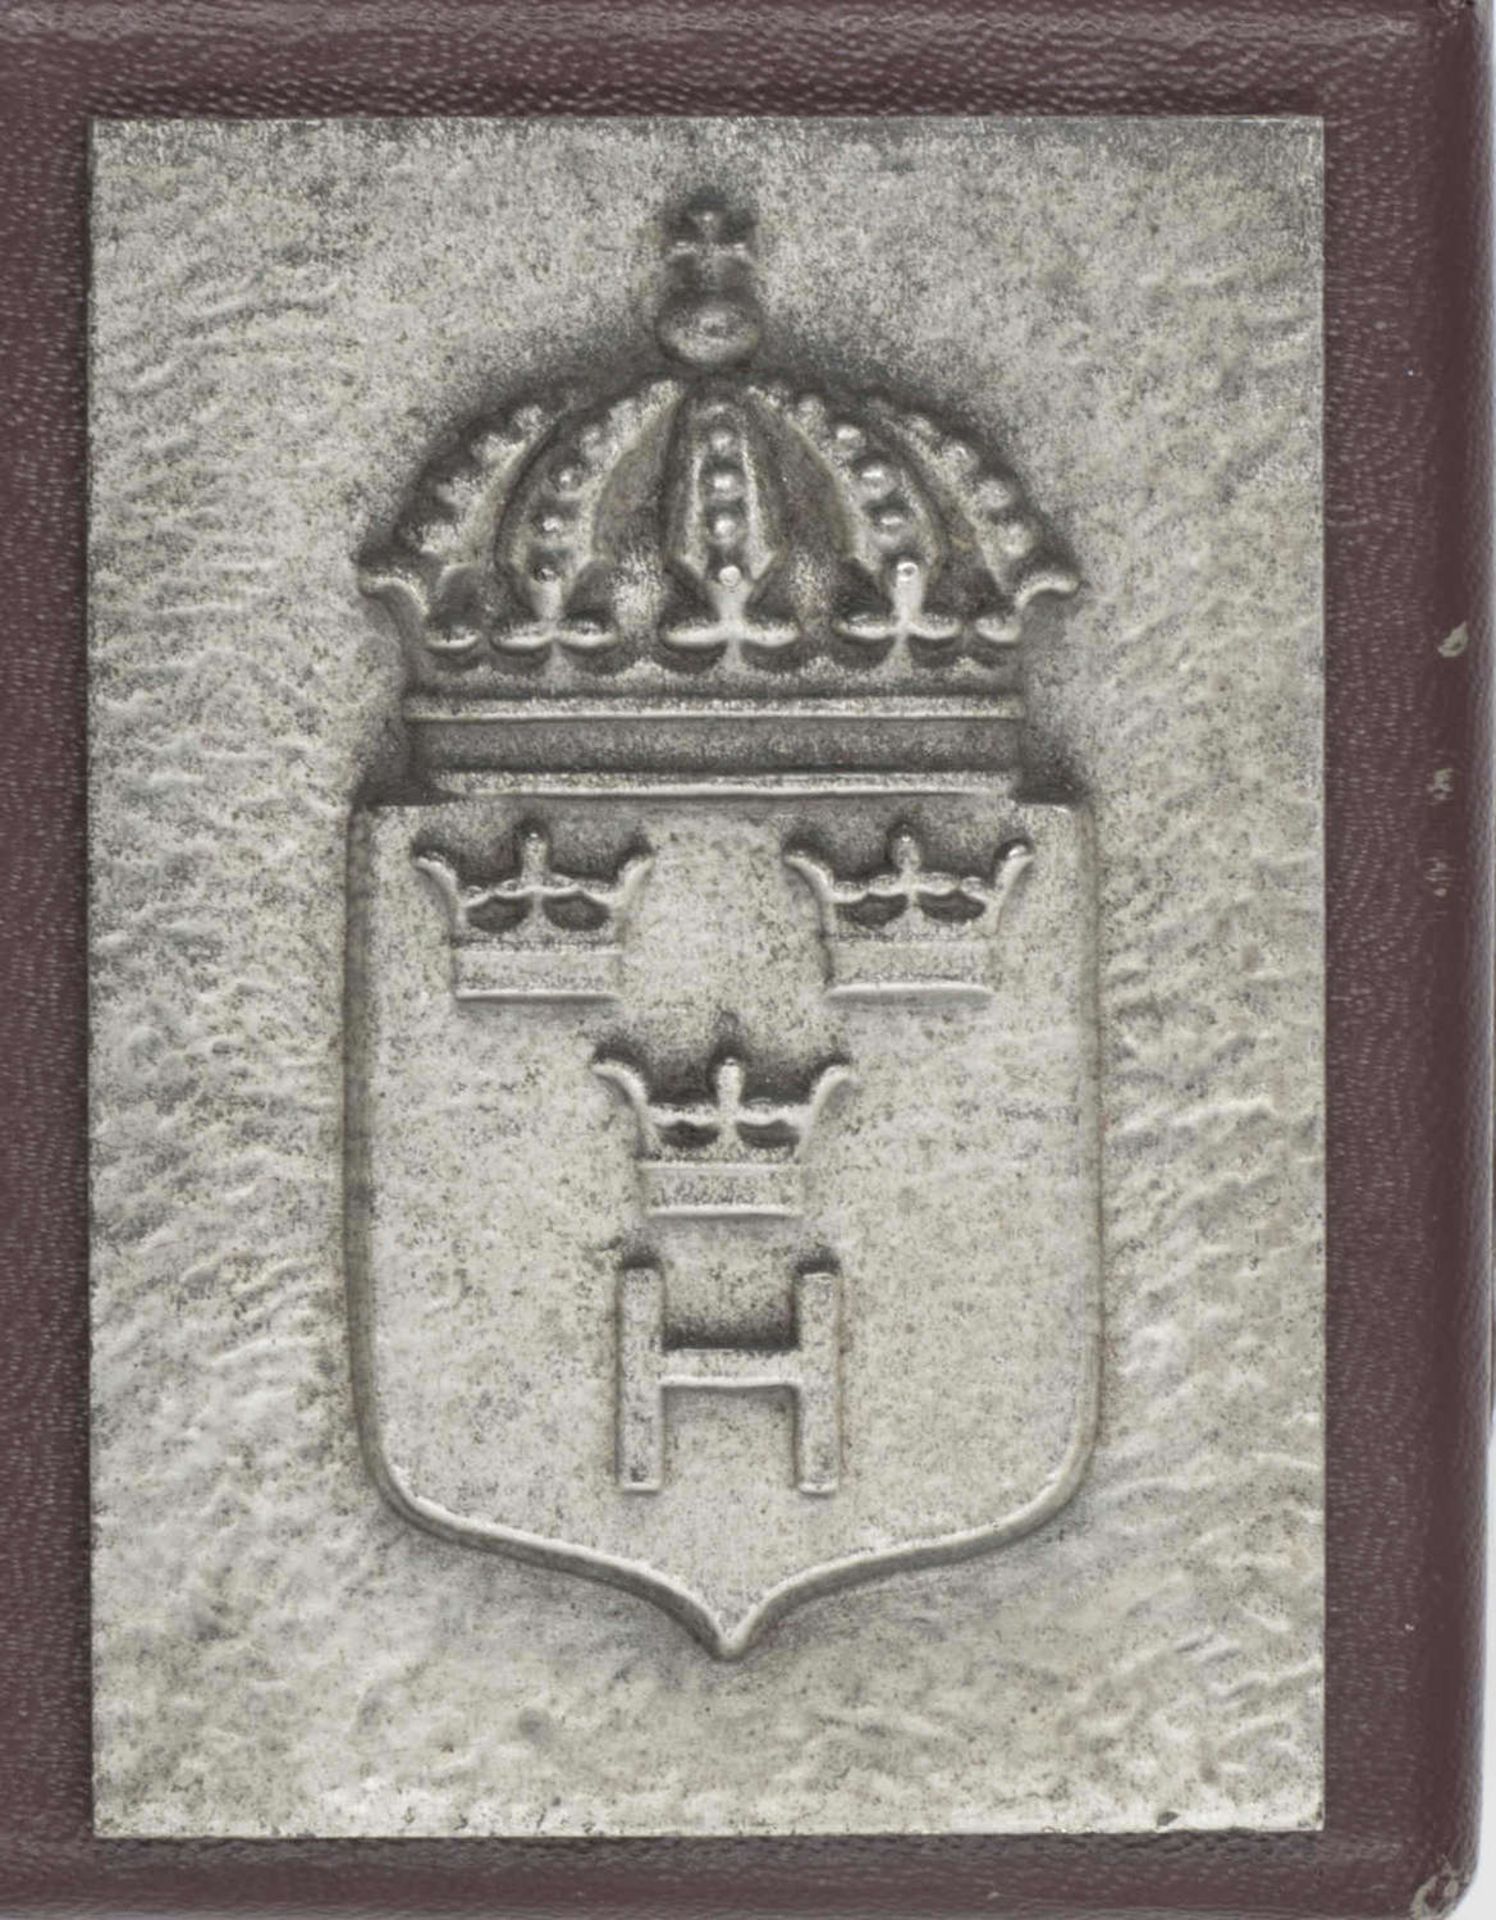 Medaille "Chief of the National Swedish Home Guard (Rikshemvärnschefen)". Metall. Maße: ca. 70 mm